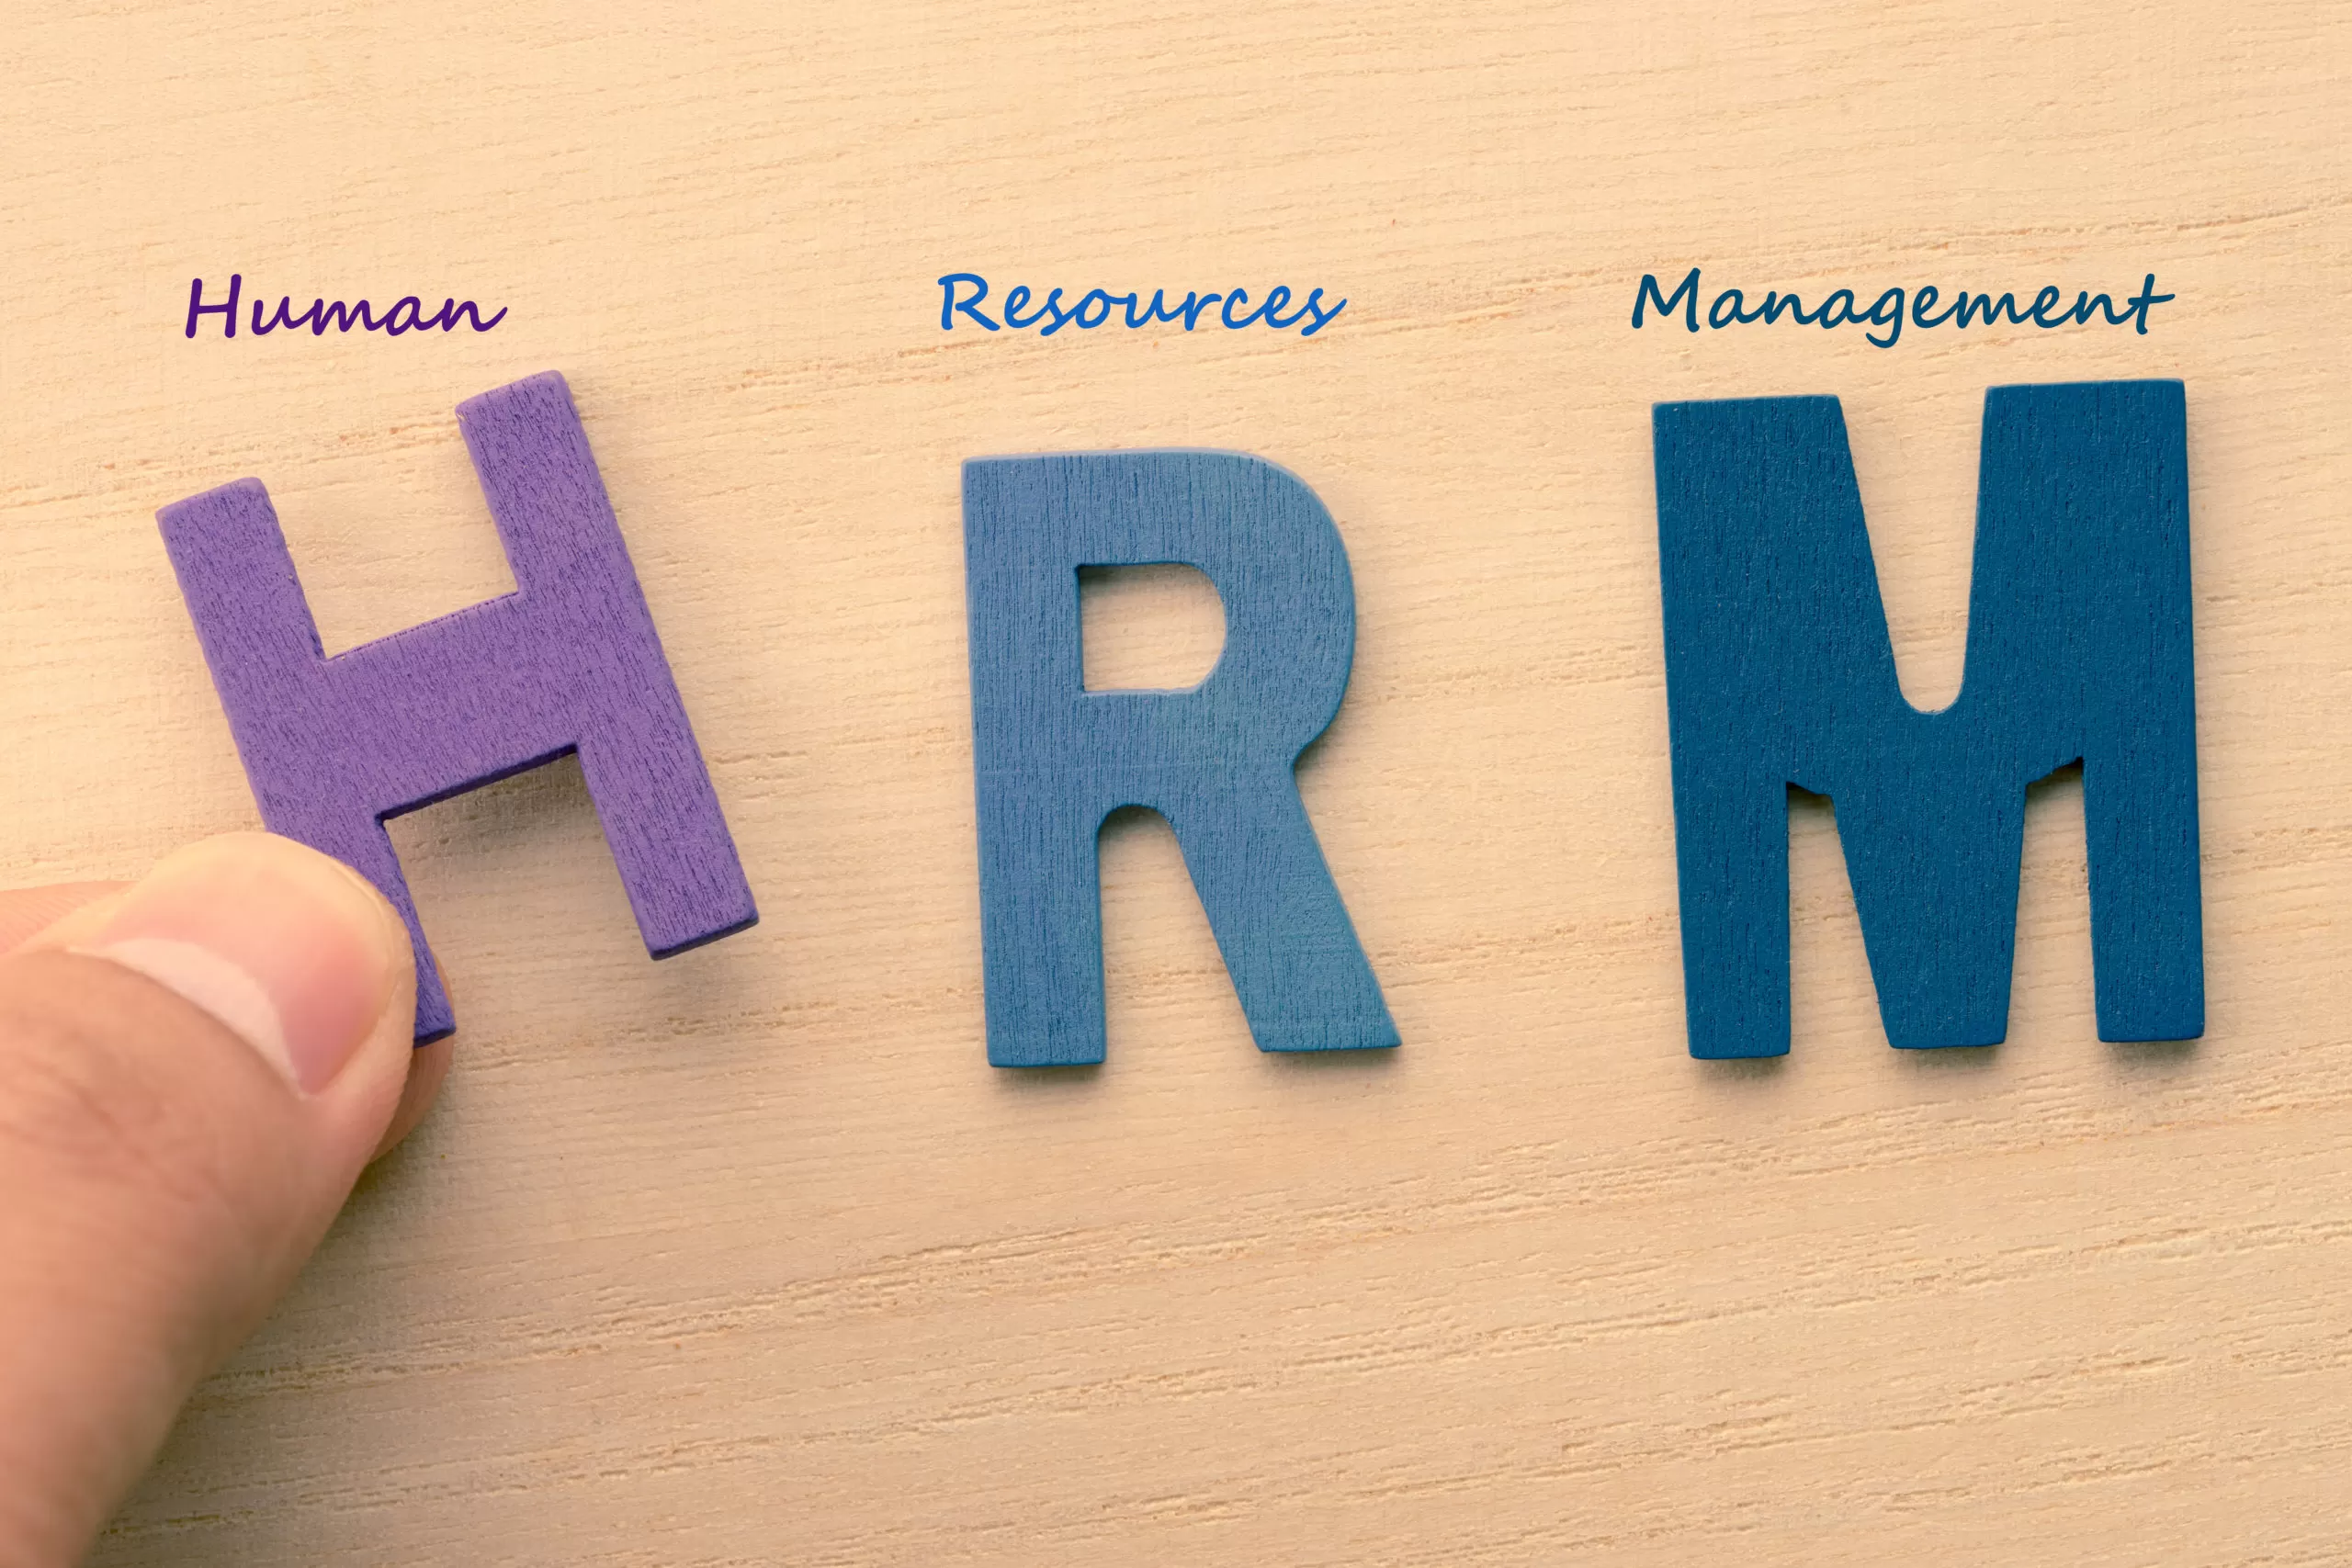 HRM (Human Resources Management)